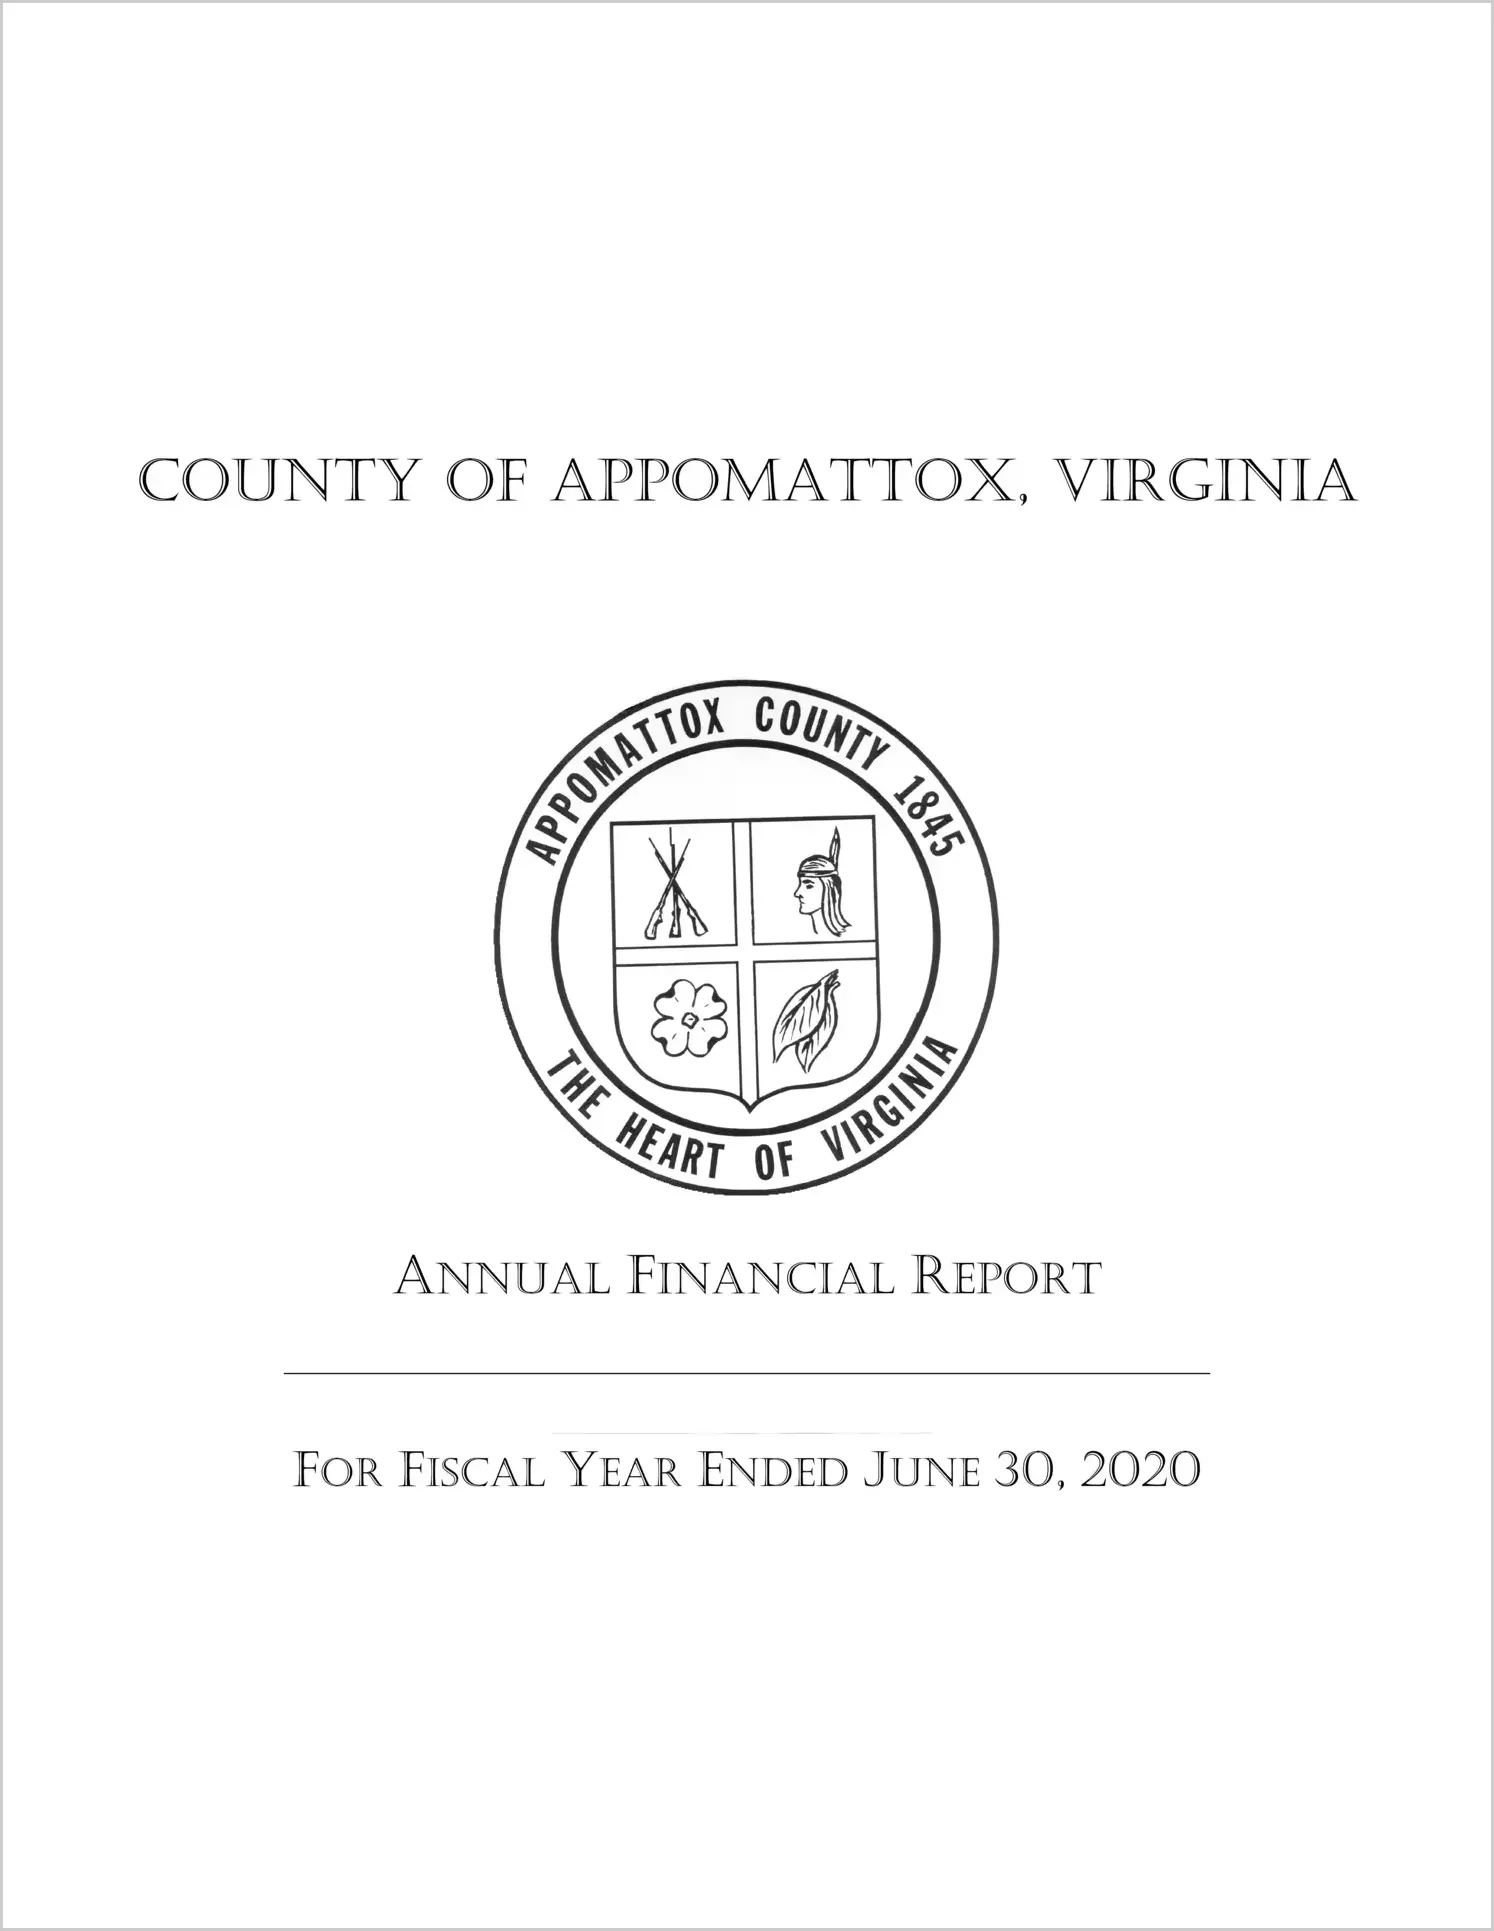 2020 Annual Financial Report for County of Appomattox